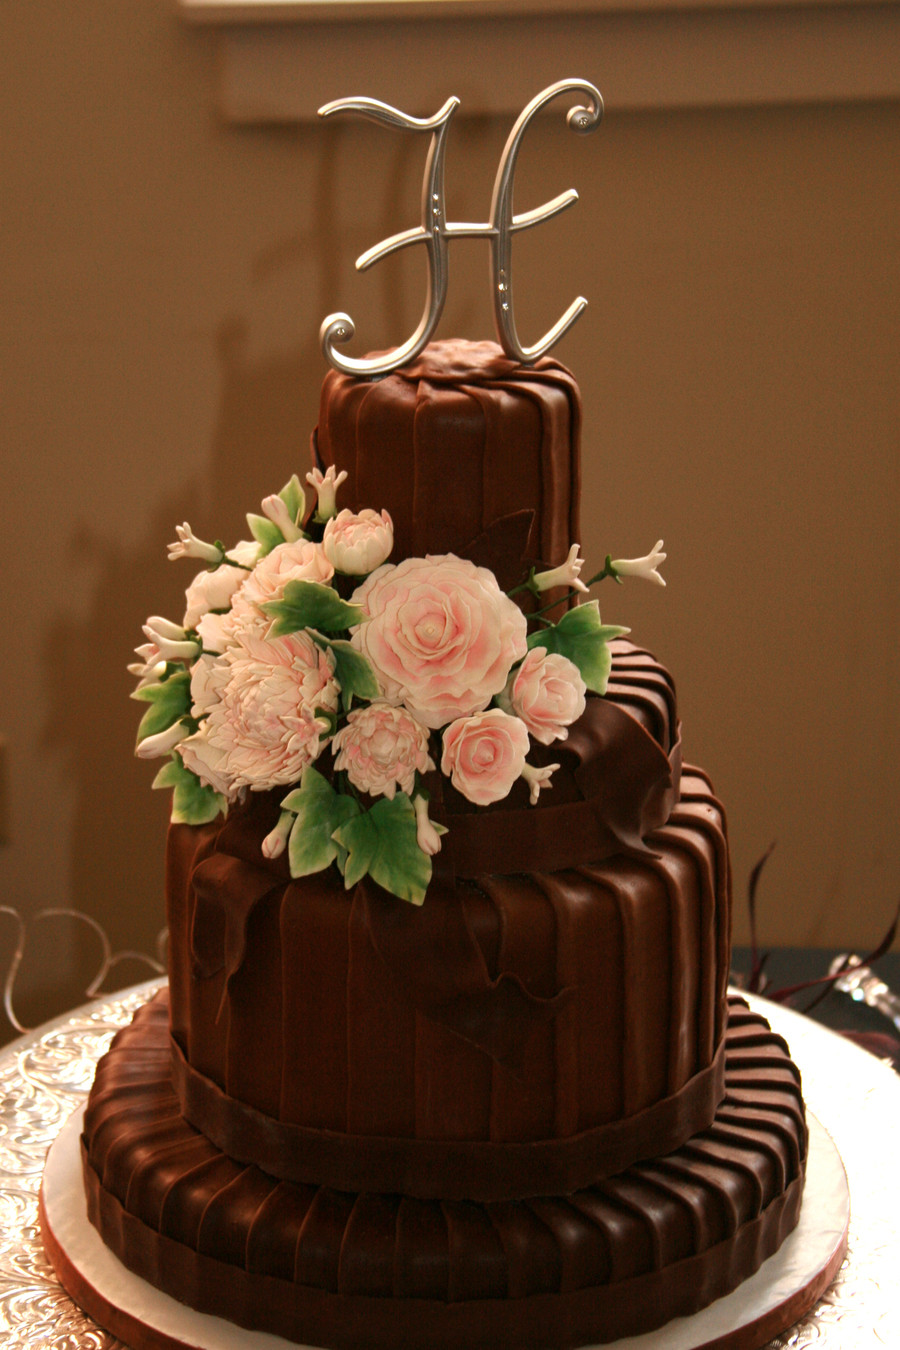 Chocolate Buttercream Wedding Cakes
 chocolate buttercream wedding cakes